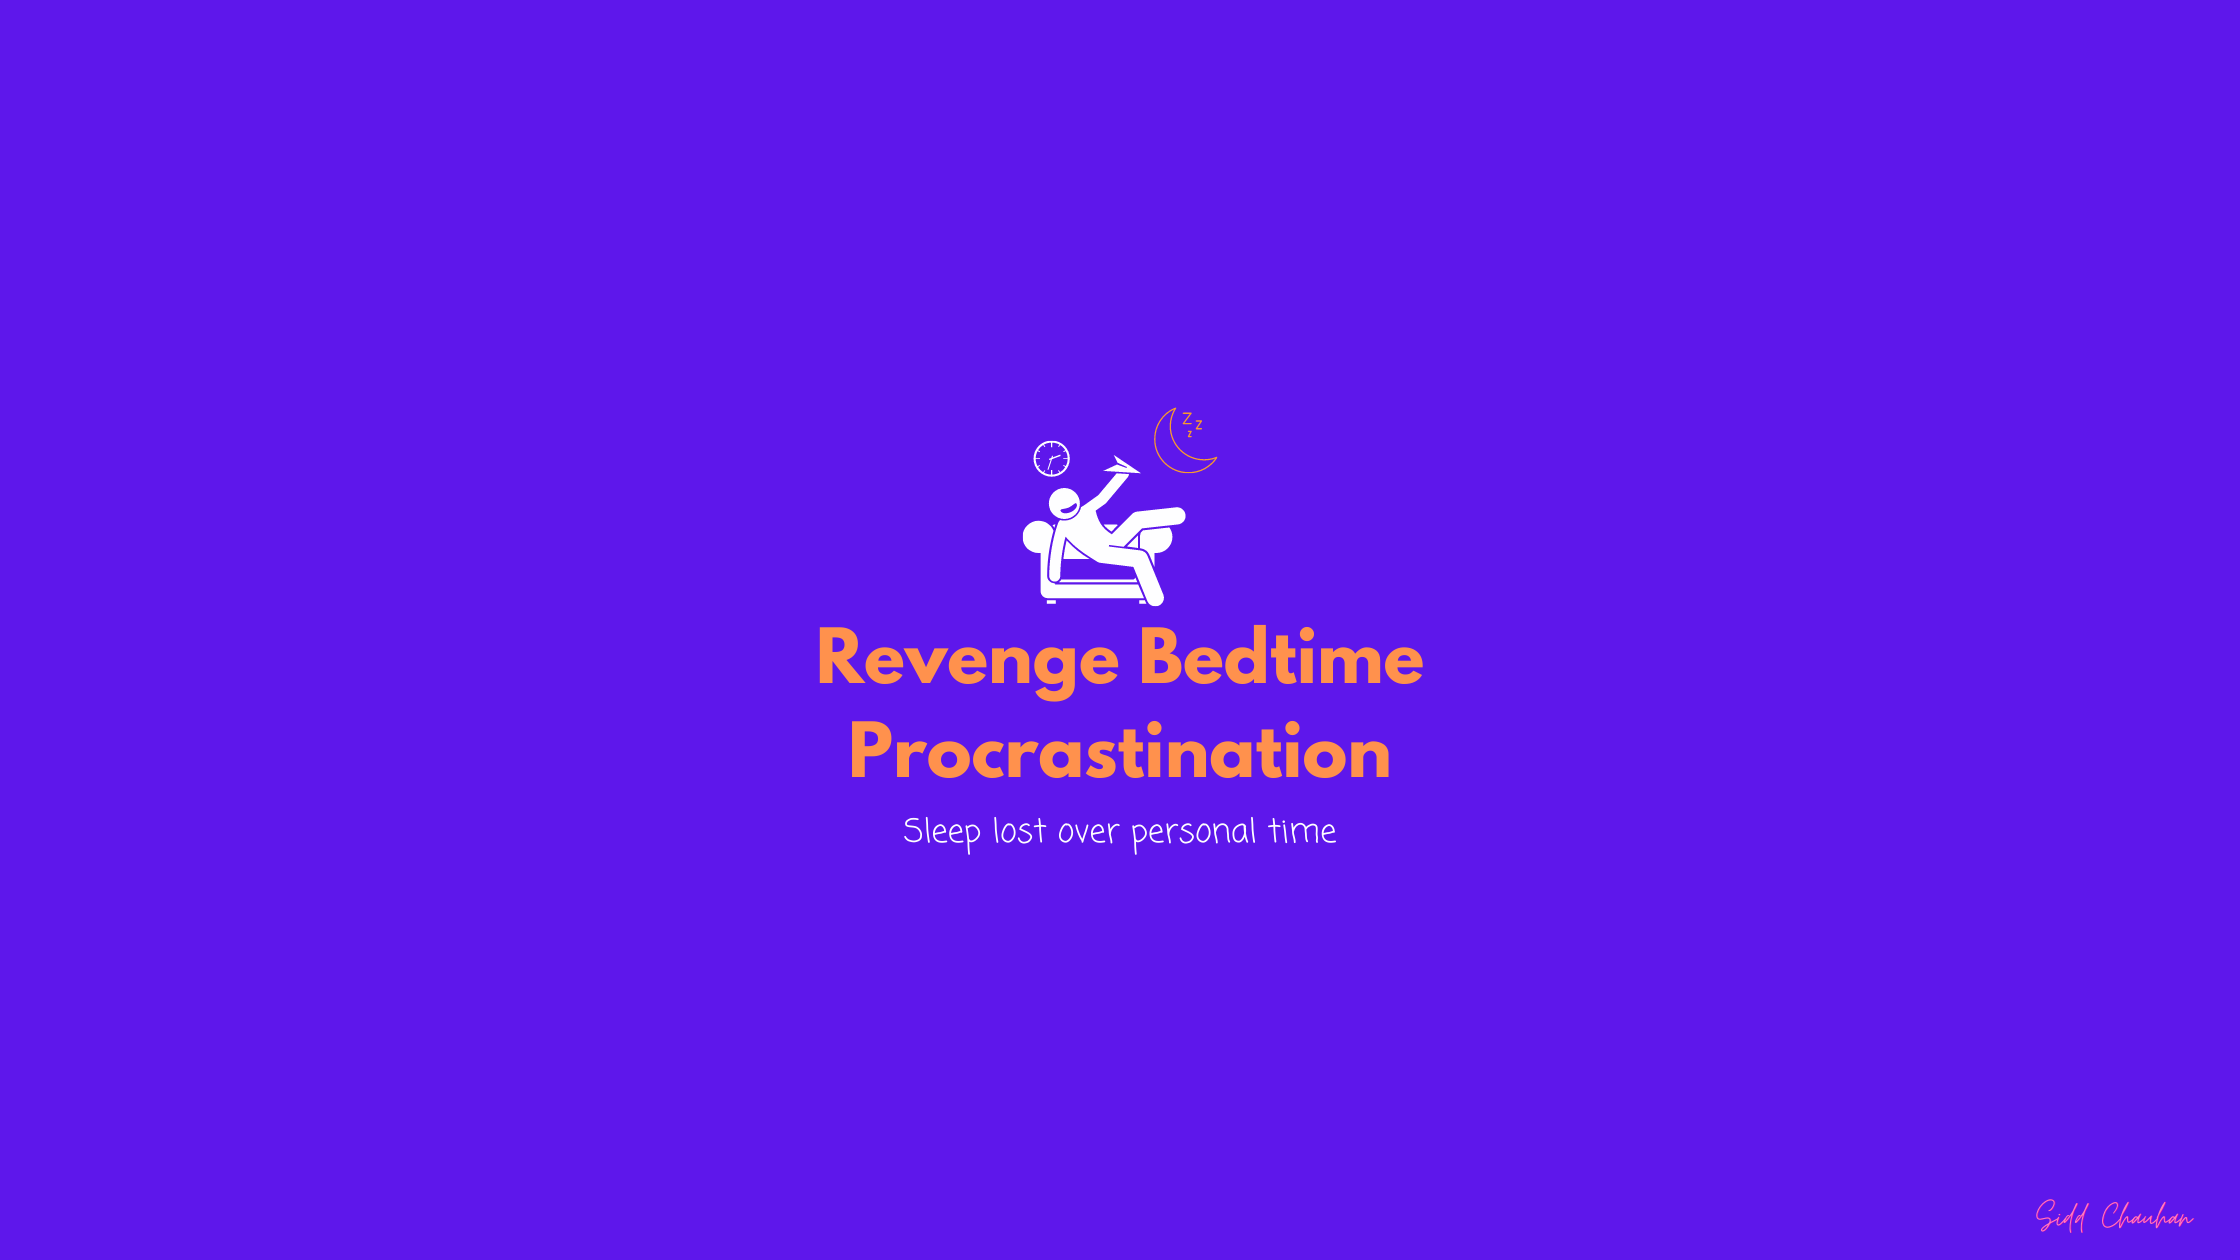 40: The Rise of Revenge Bedtime Procrastination